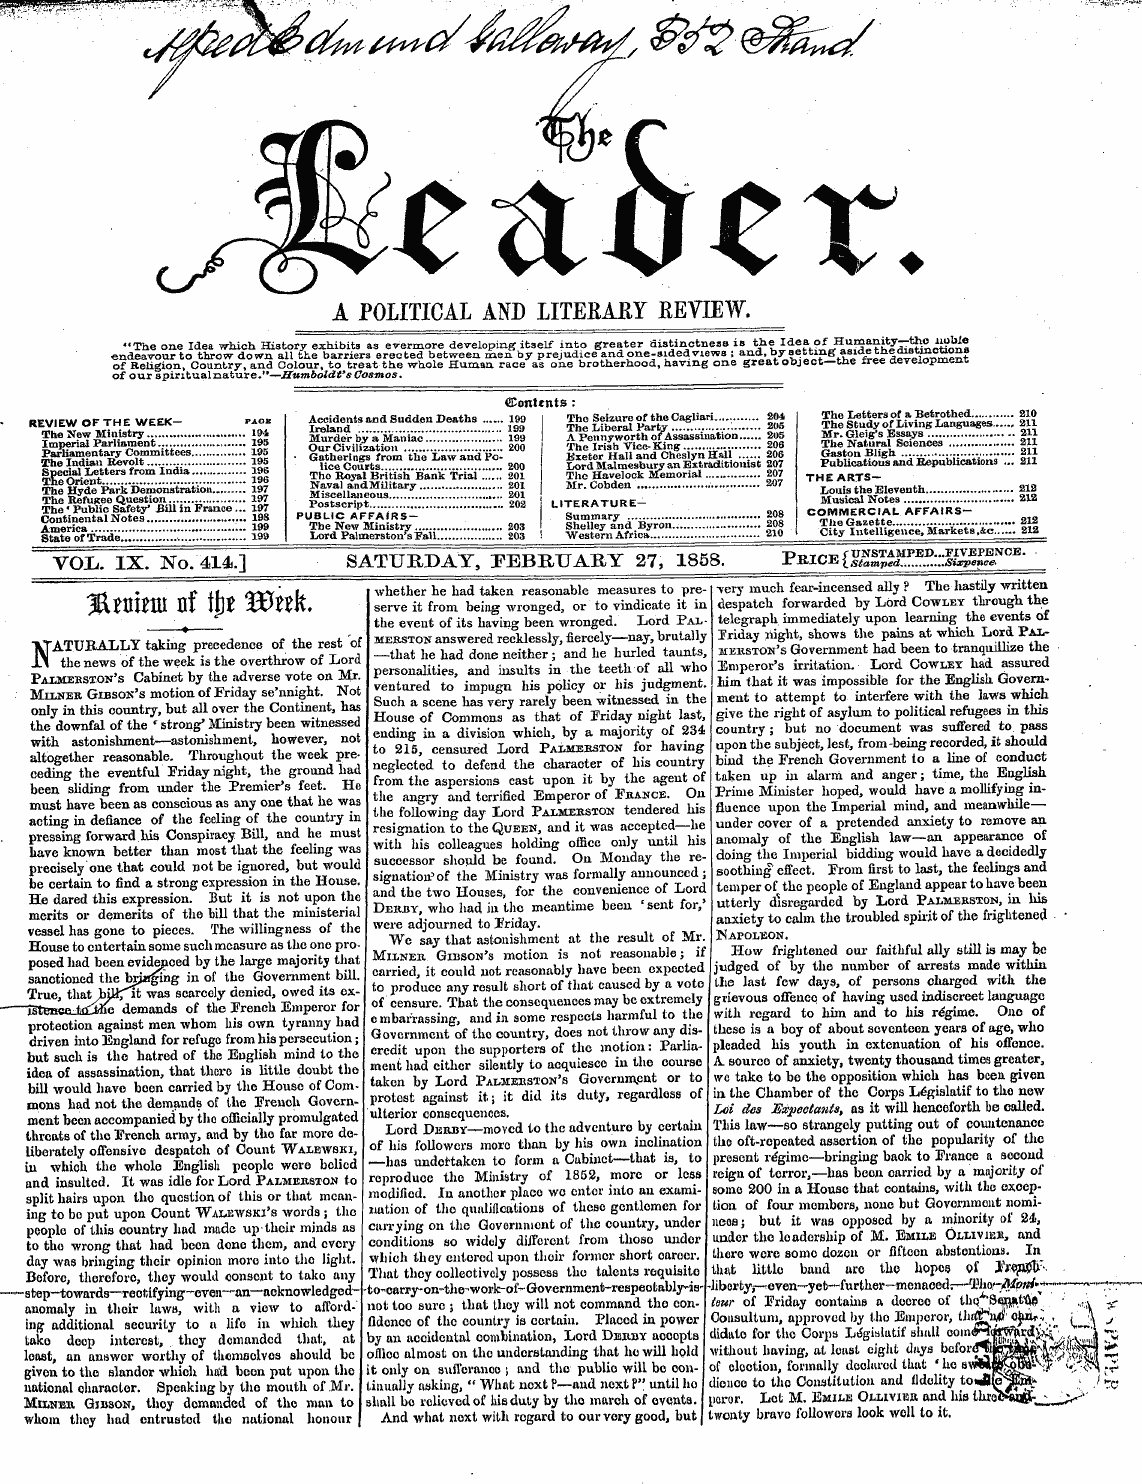 Leader (1850-1860): jS F Y, 2nd edition - Vol. Ix. No. 414,.] Saturday, February 2...